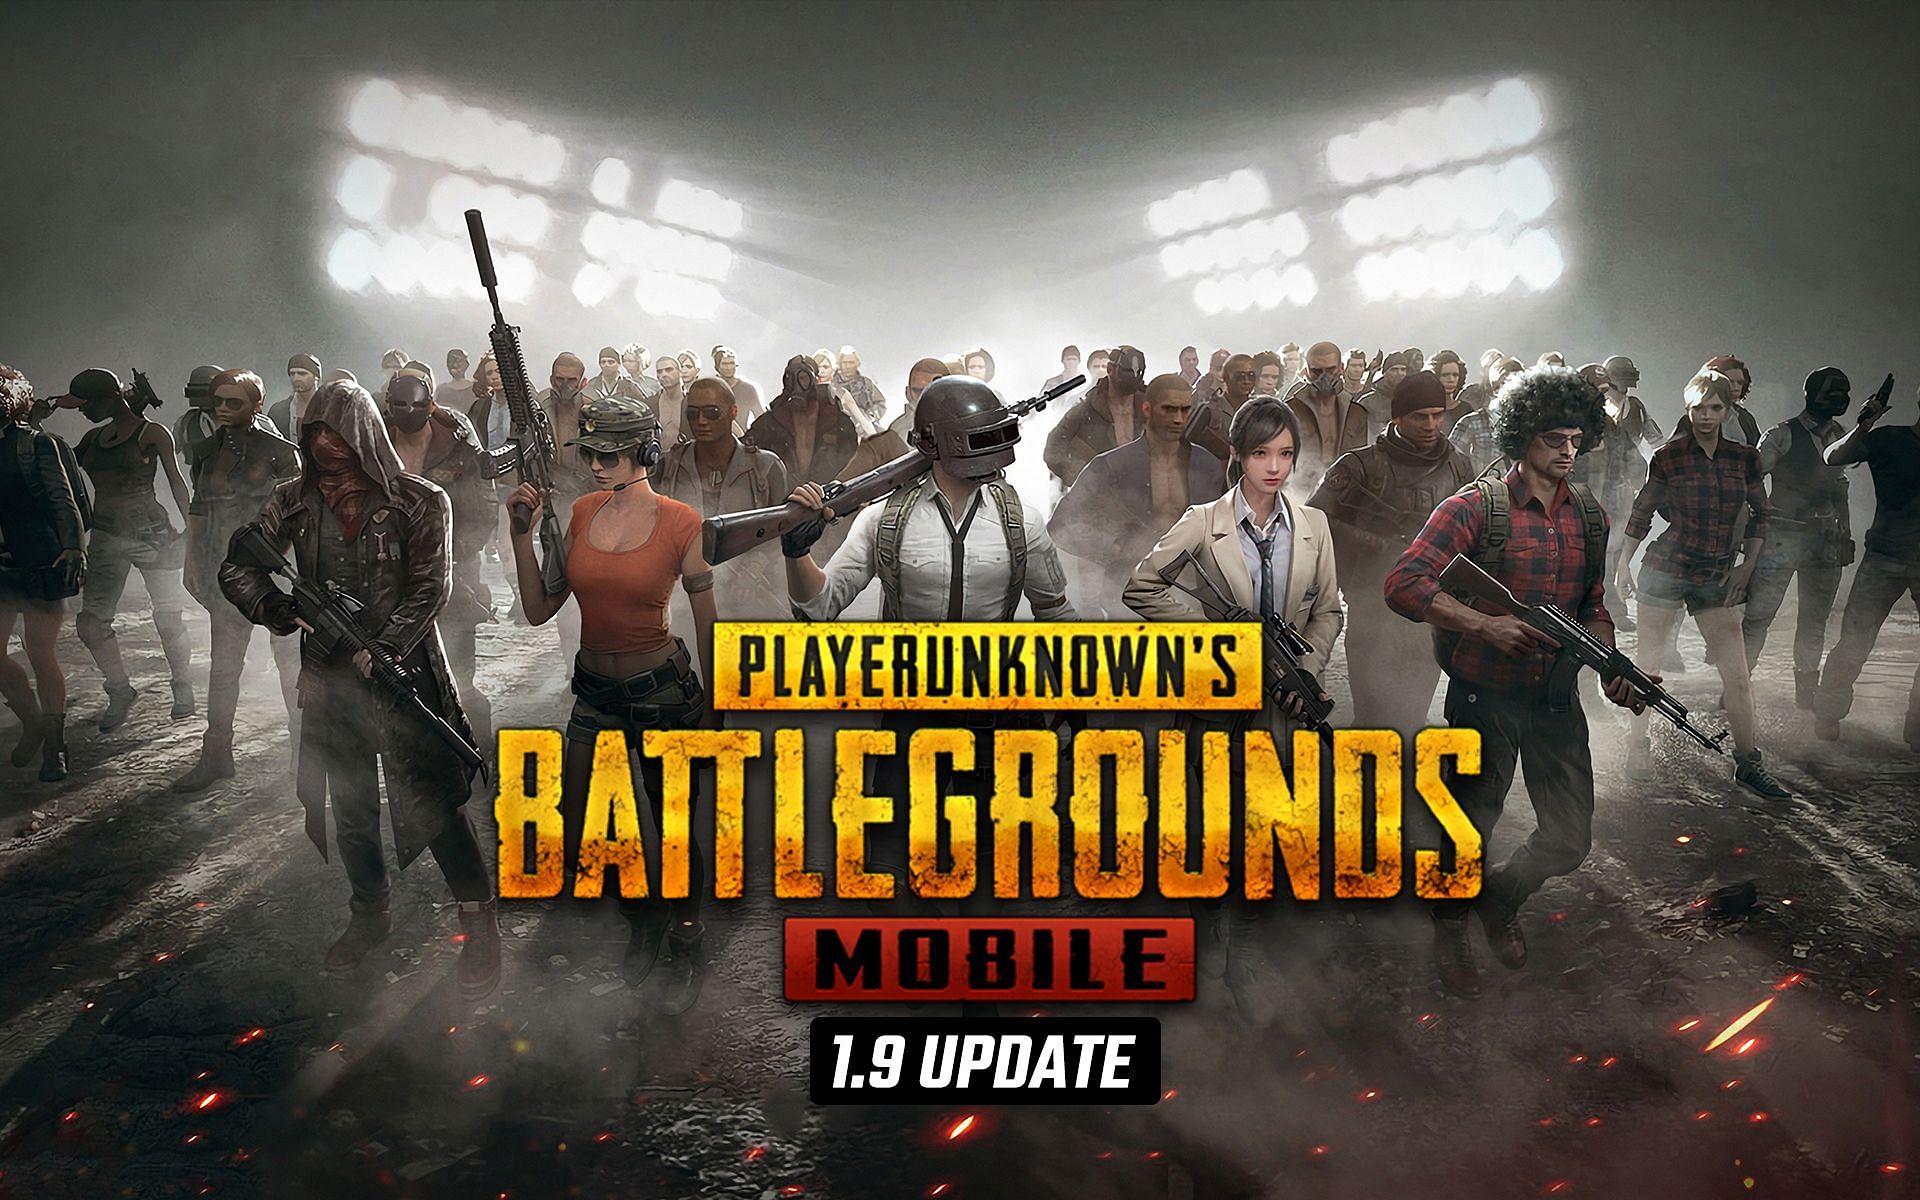 Awaiting the release of the 1.9 update in PUBG Mobile (Image via Sportskeeda)